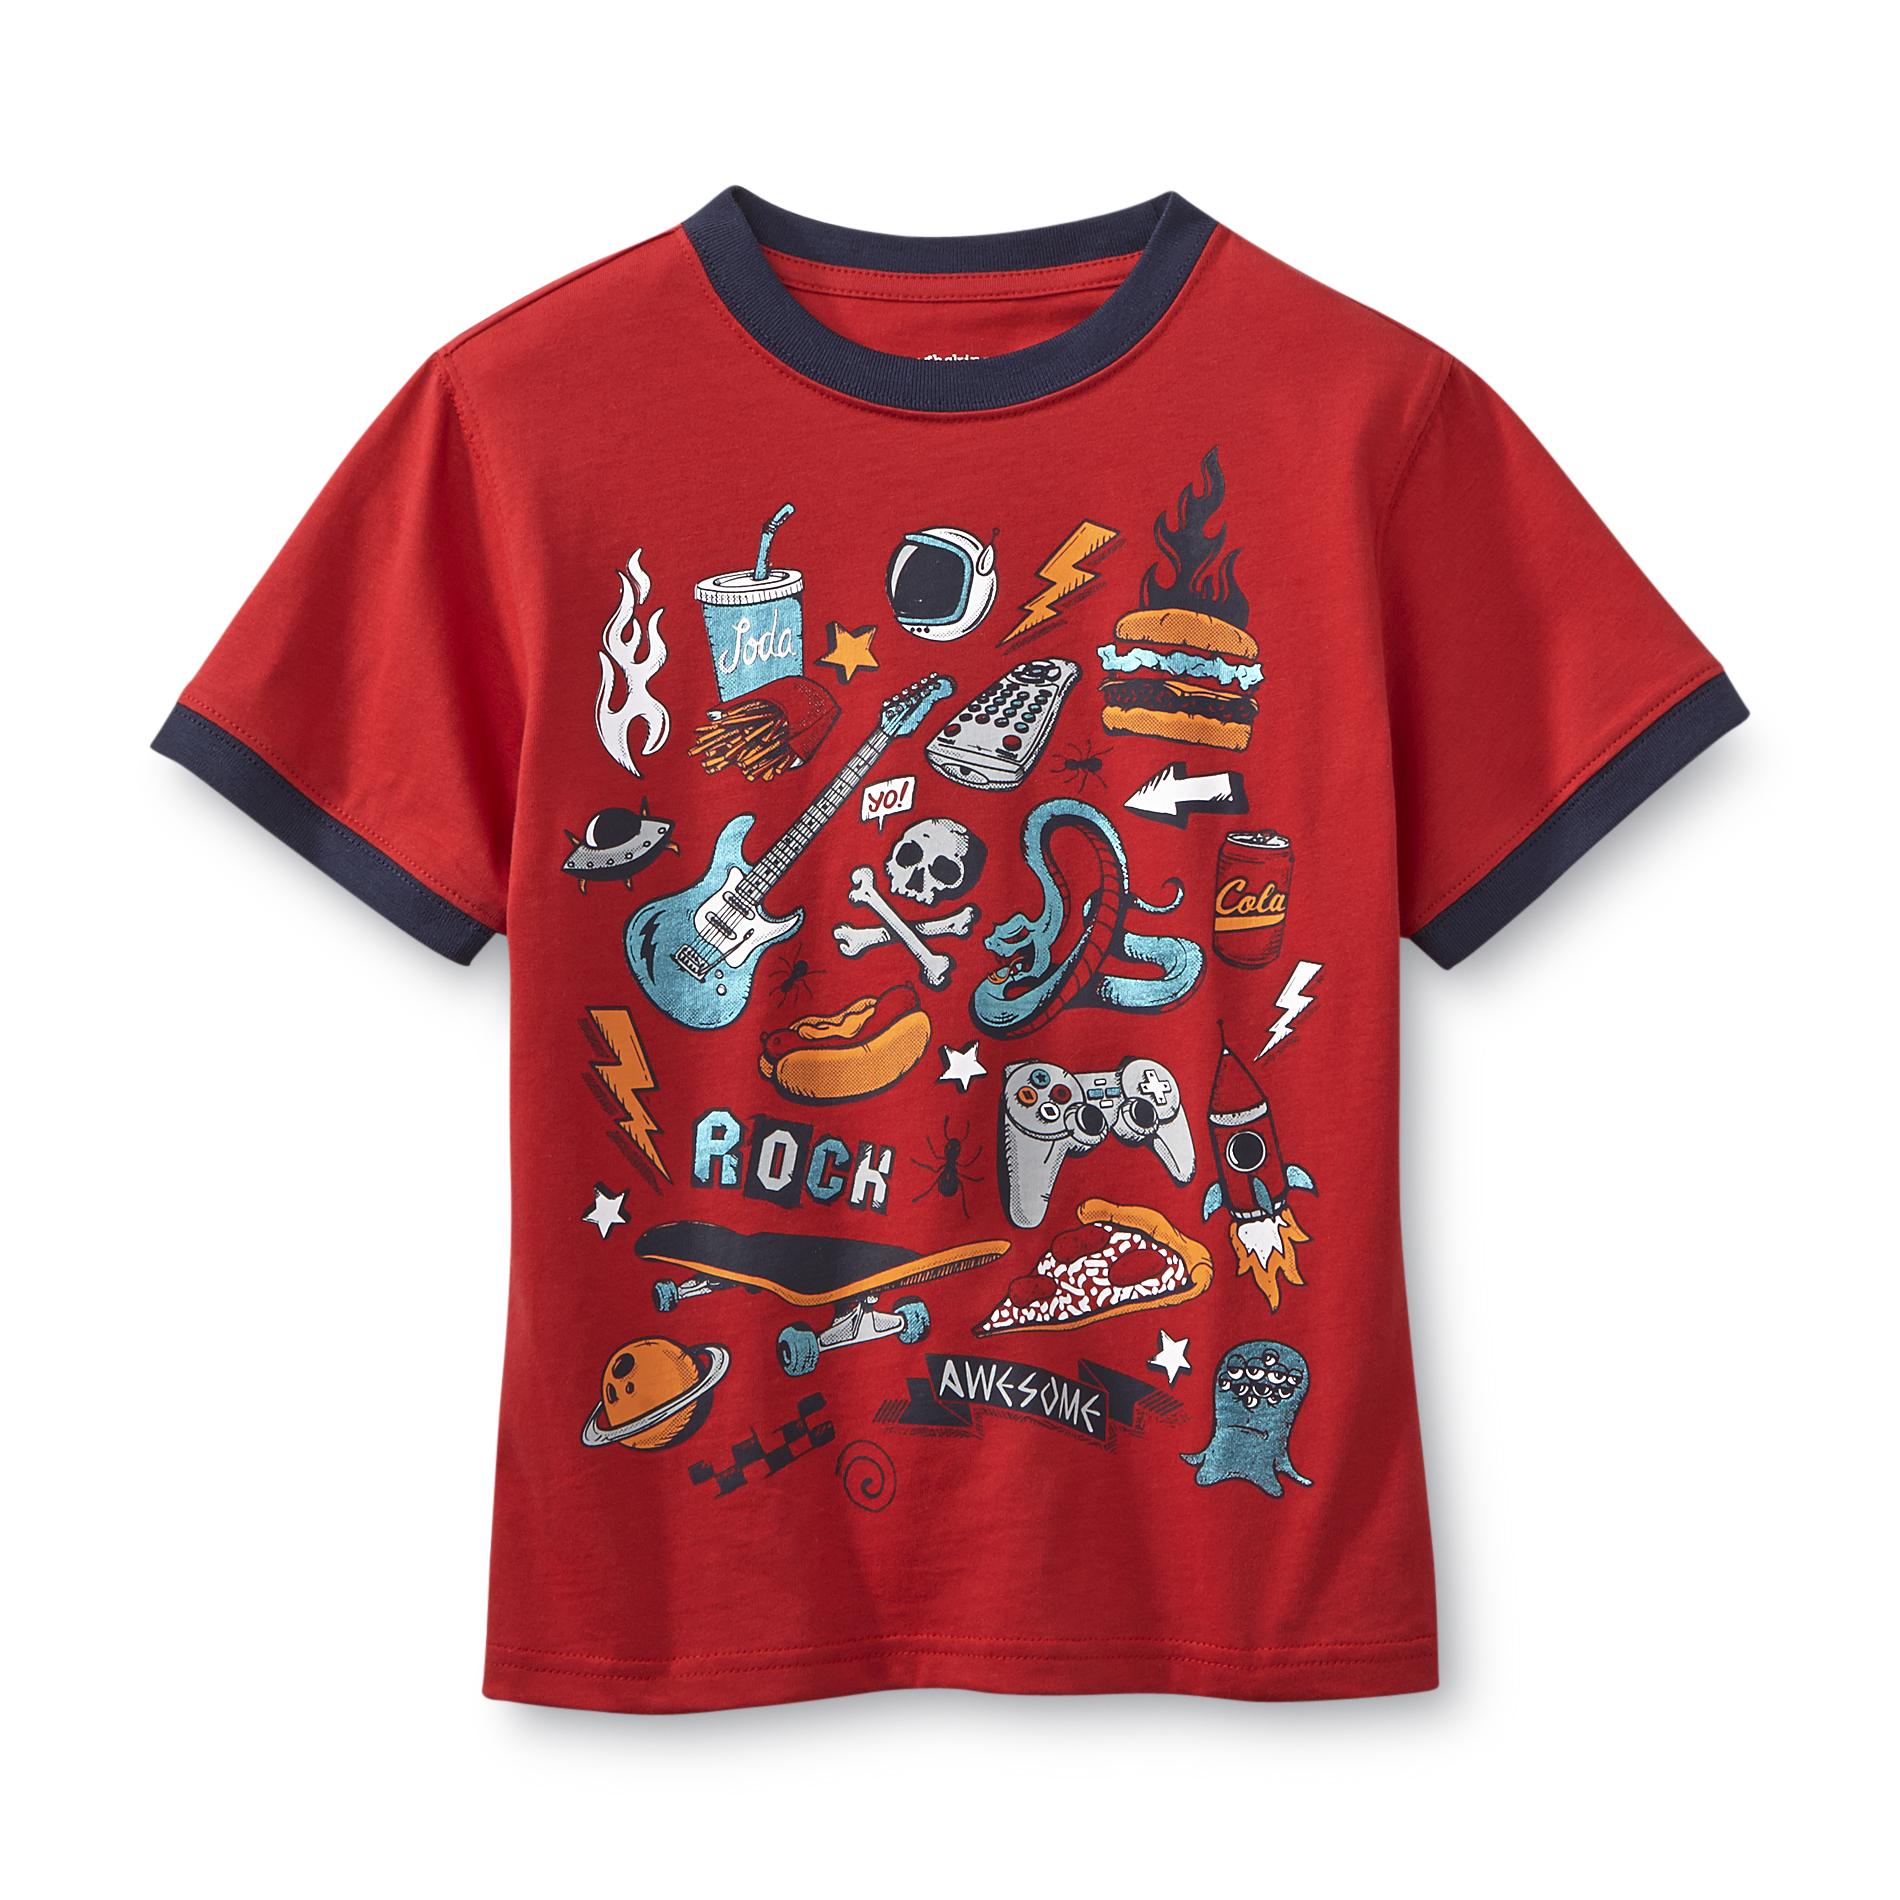 Toughskins Boy's Graphic T-Shirt